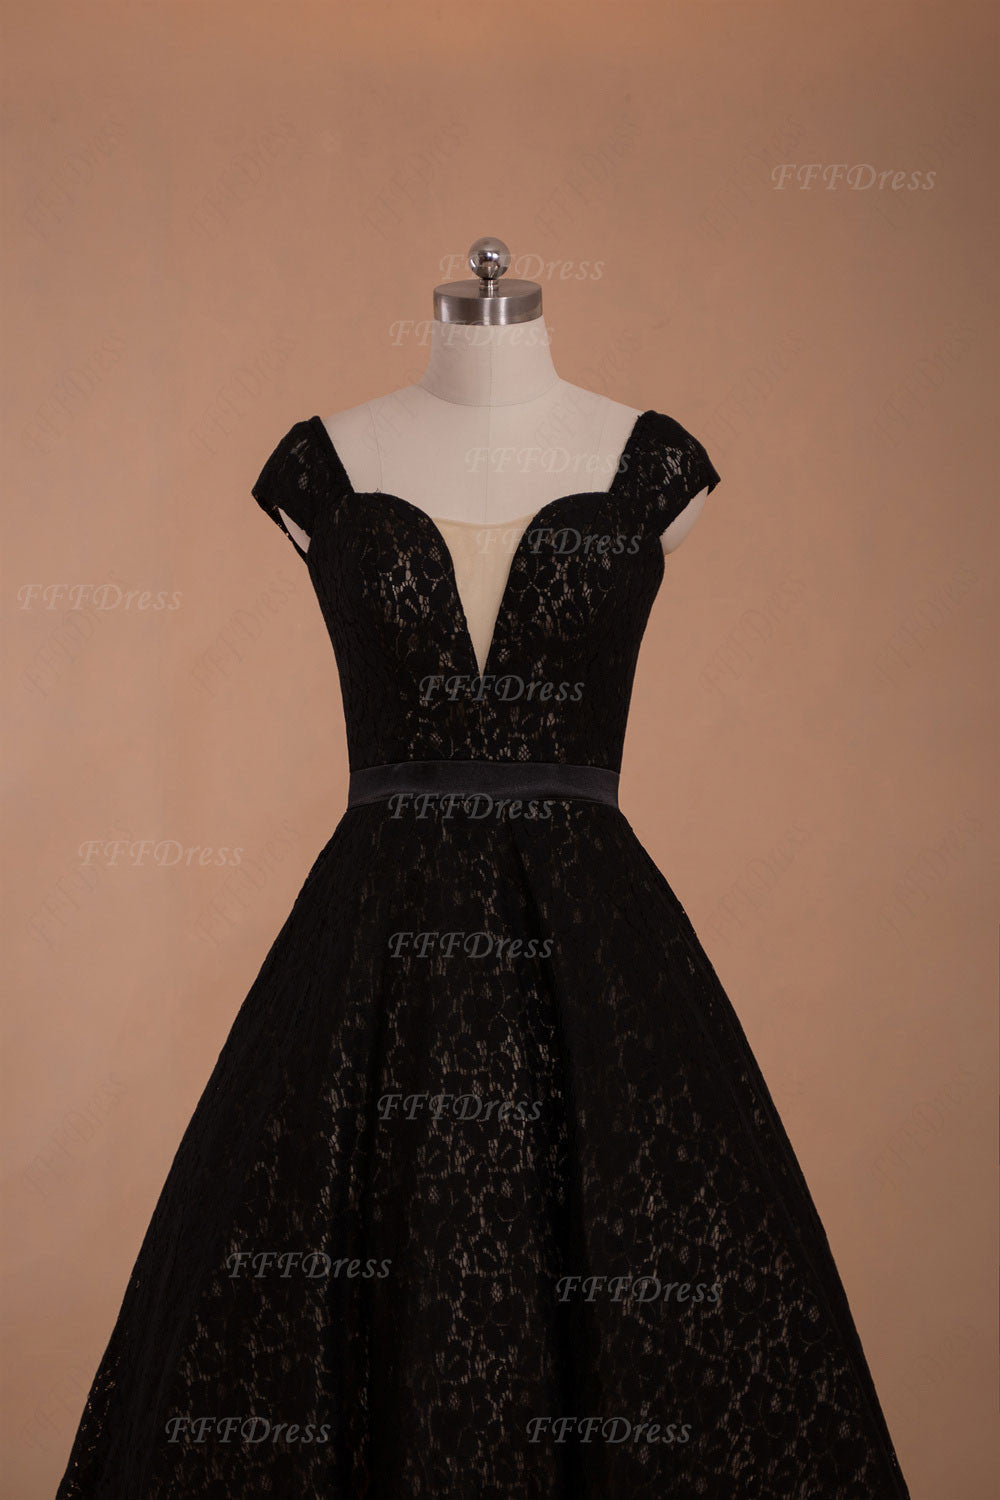 Black lace vintage little black dresses homecoming dress